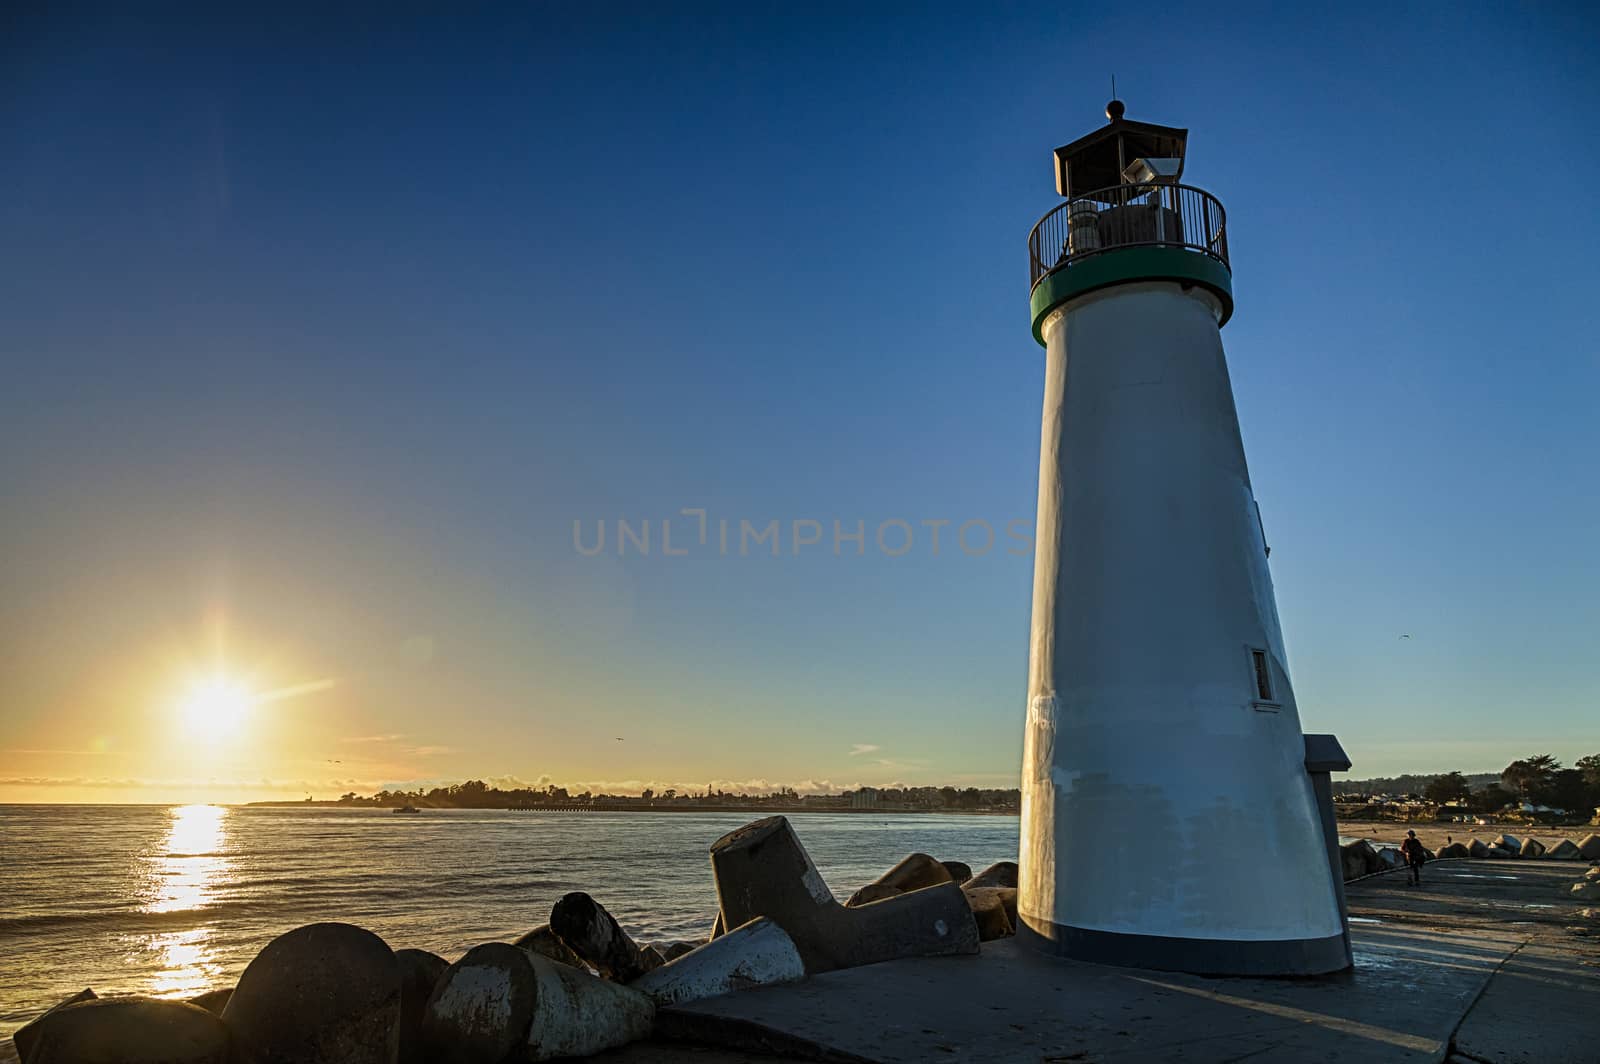 Lighthouse Walton on Santa Cruz Shore by hanusst